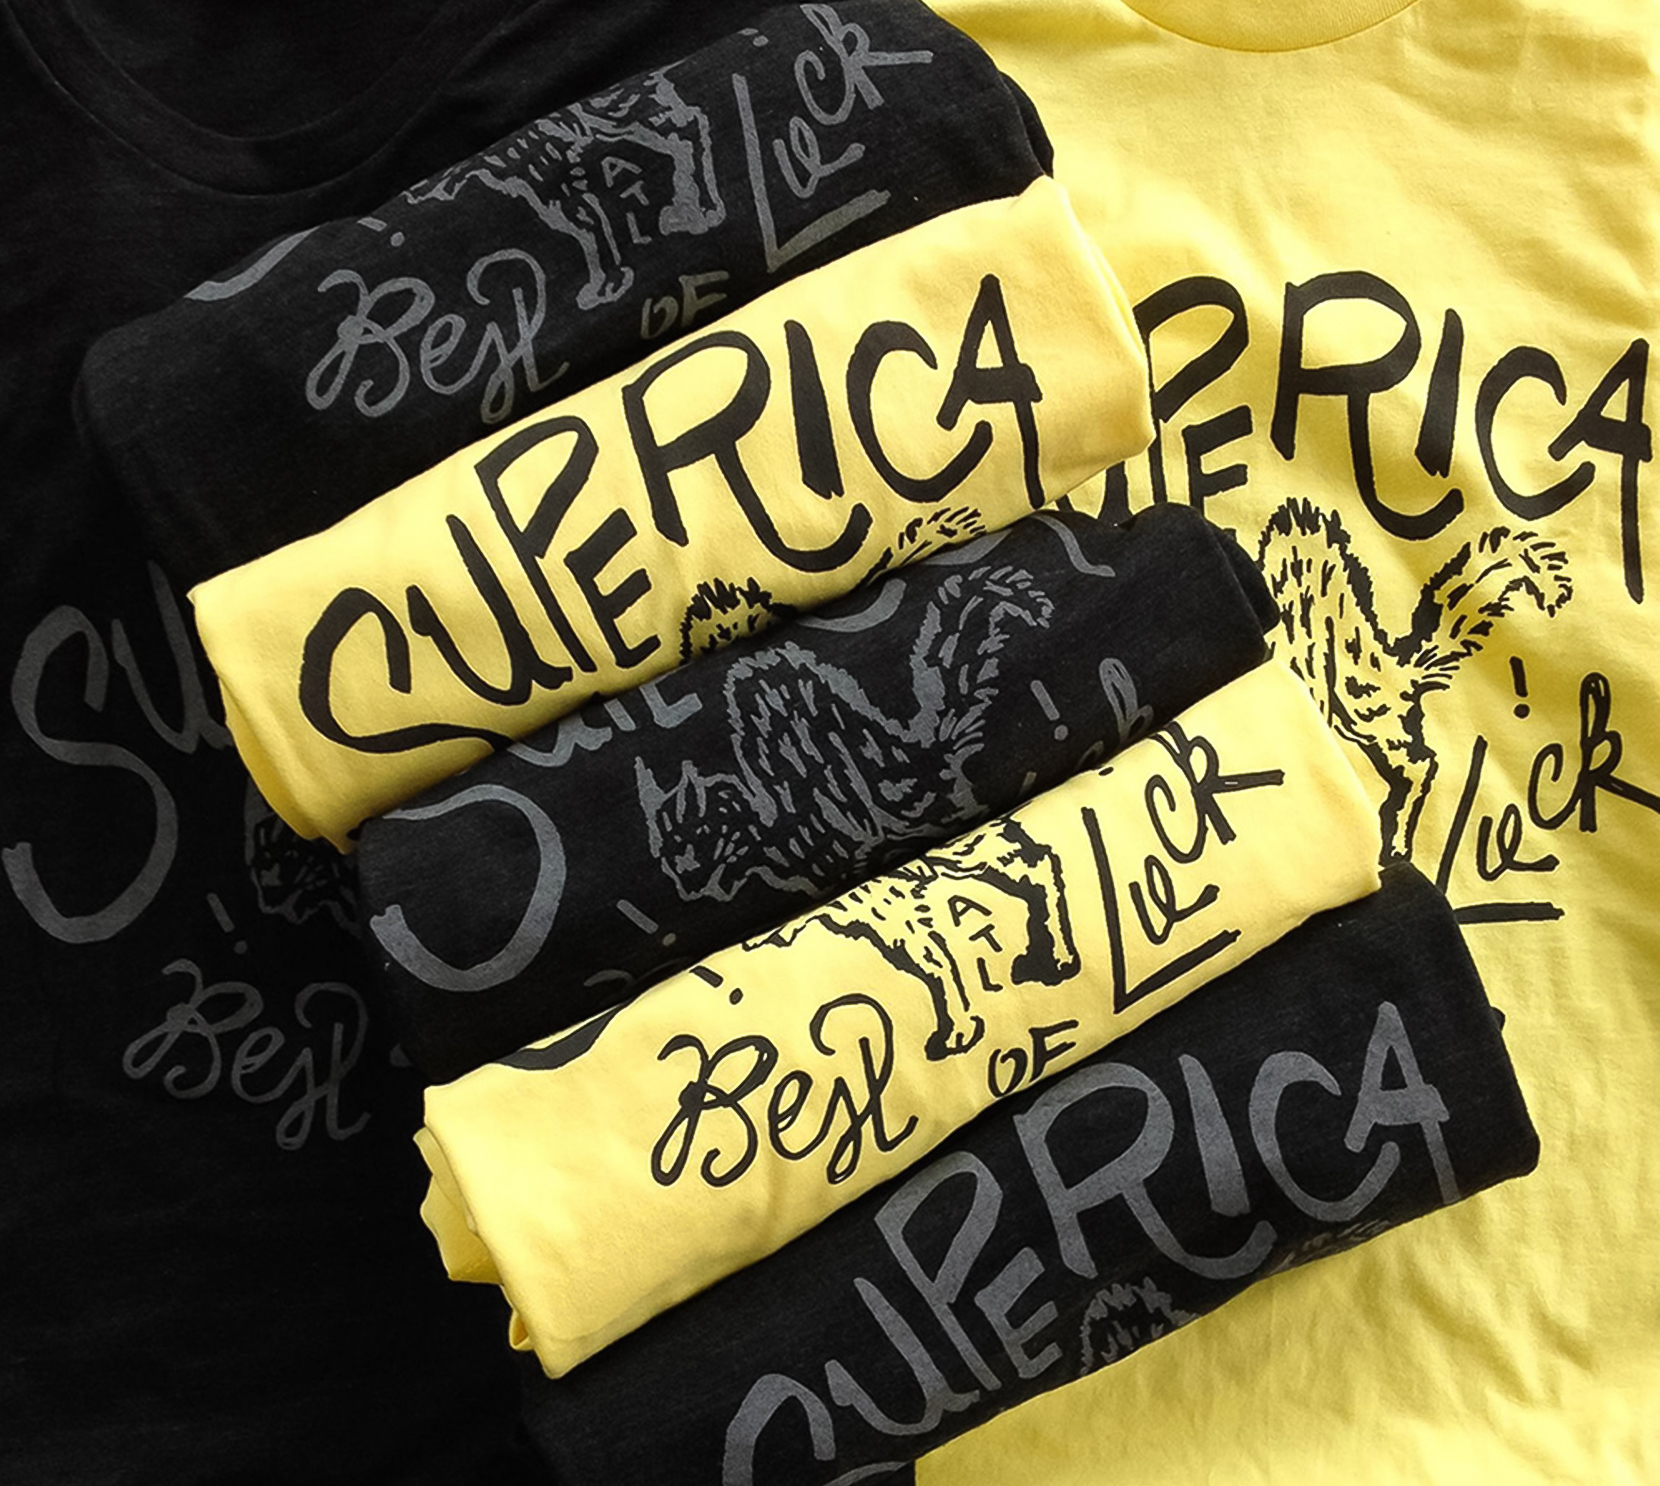 Superica-shirts2